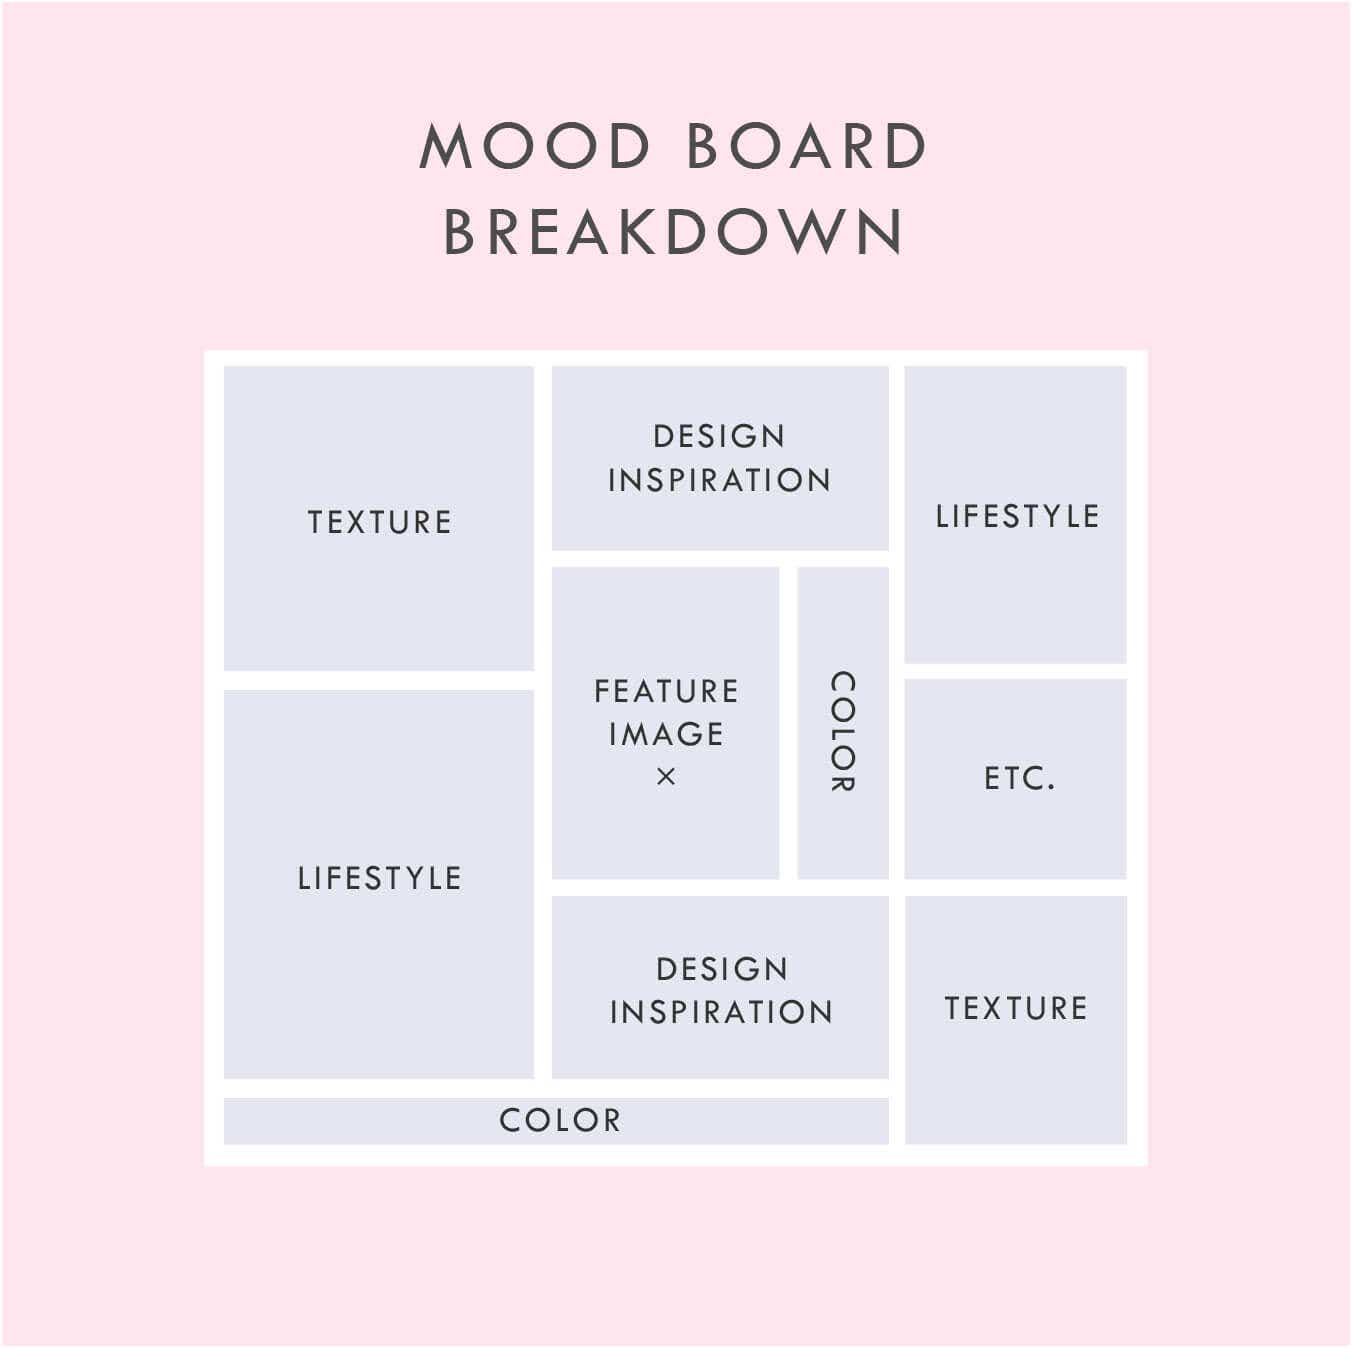 creating a mood board on canva